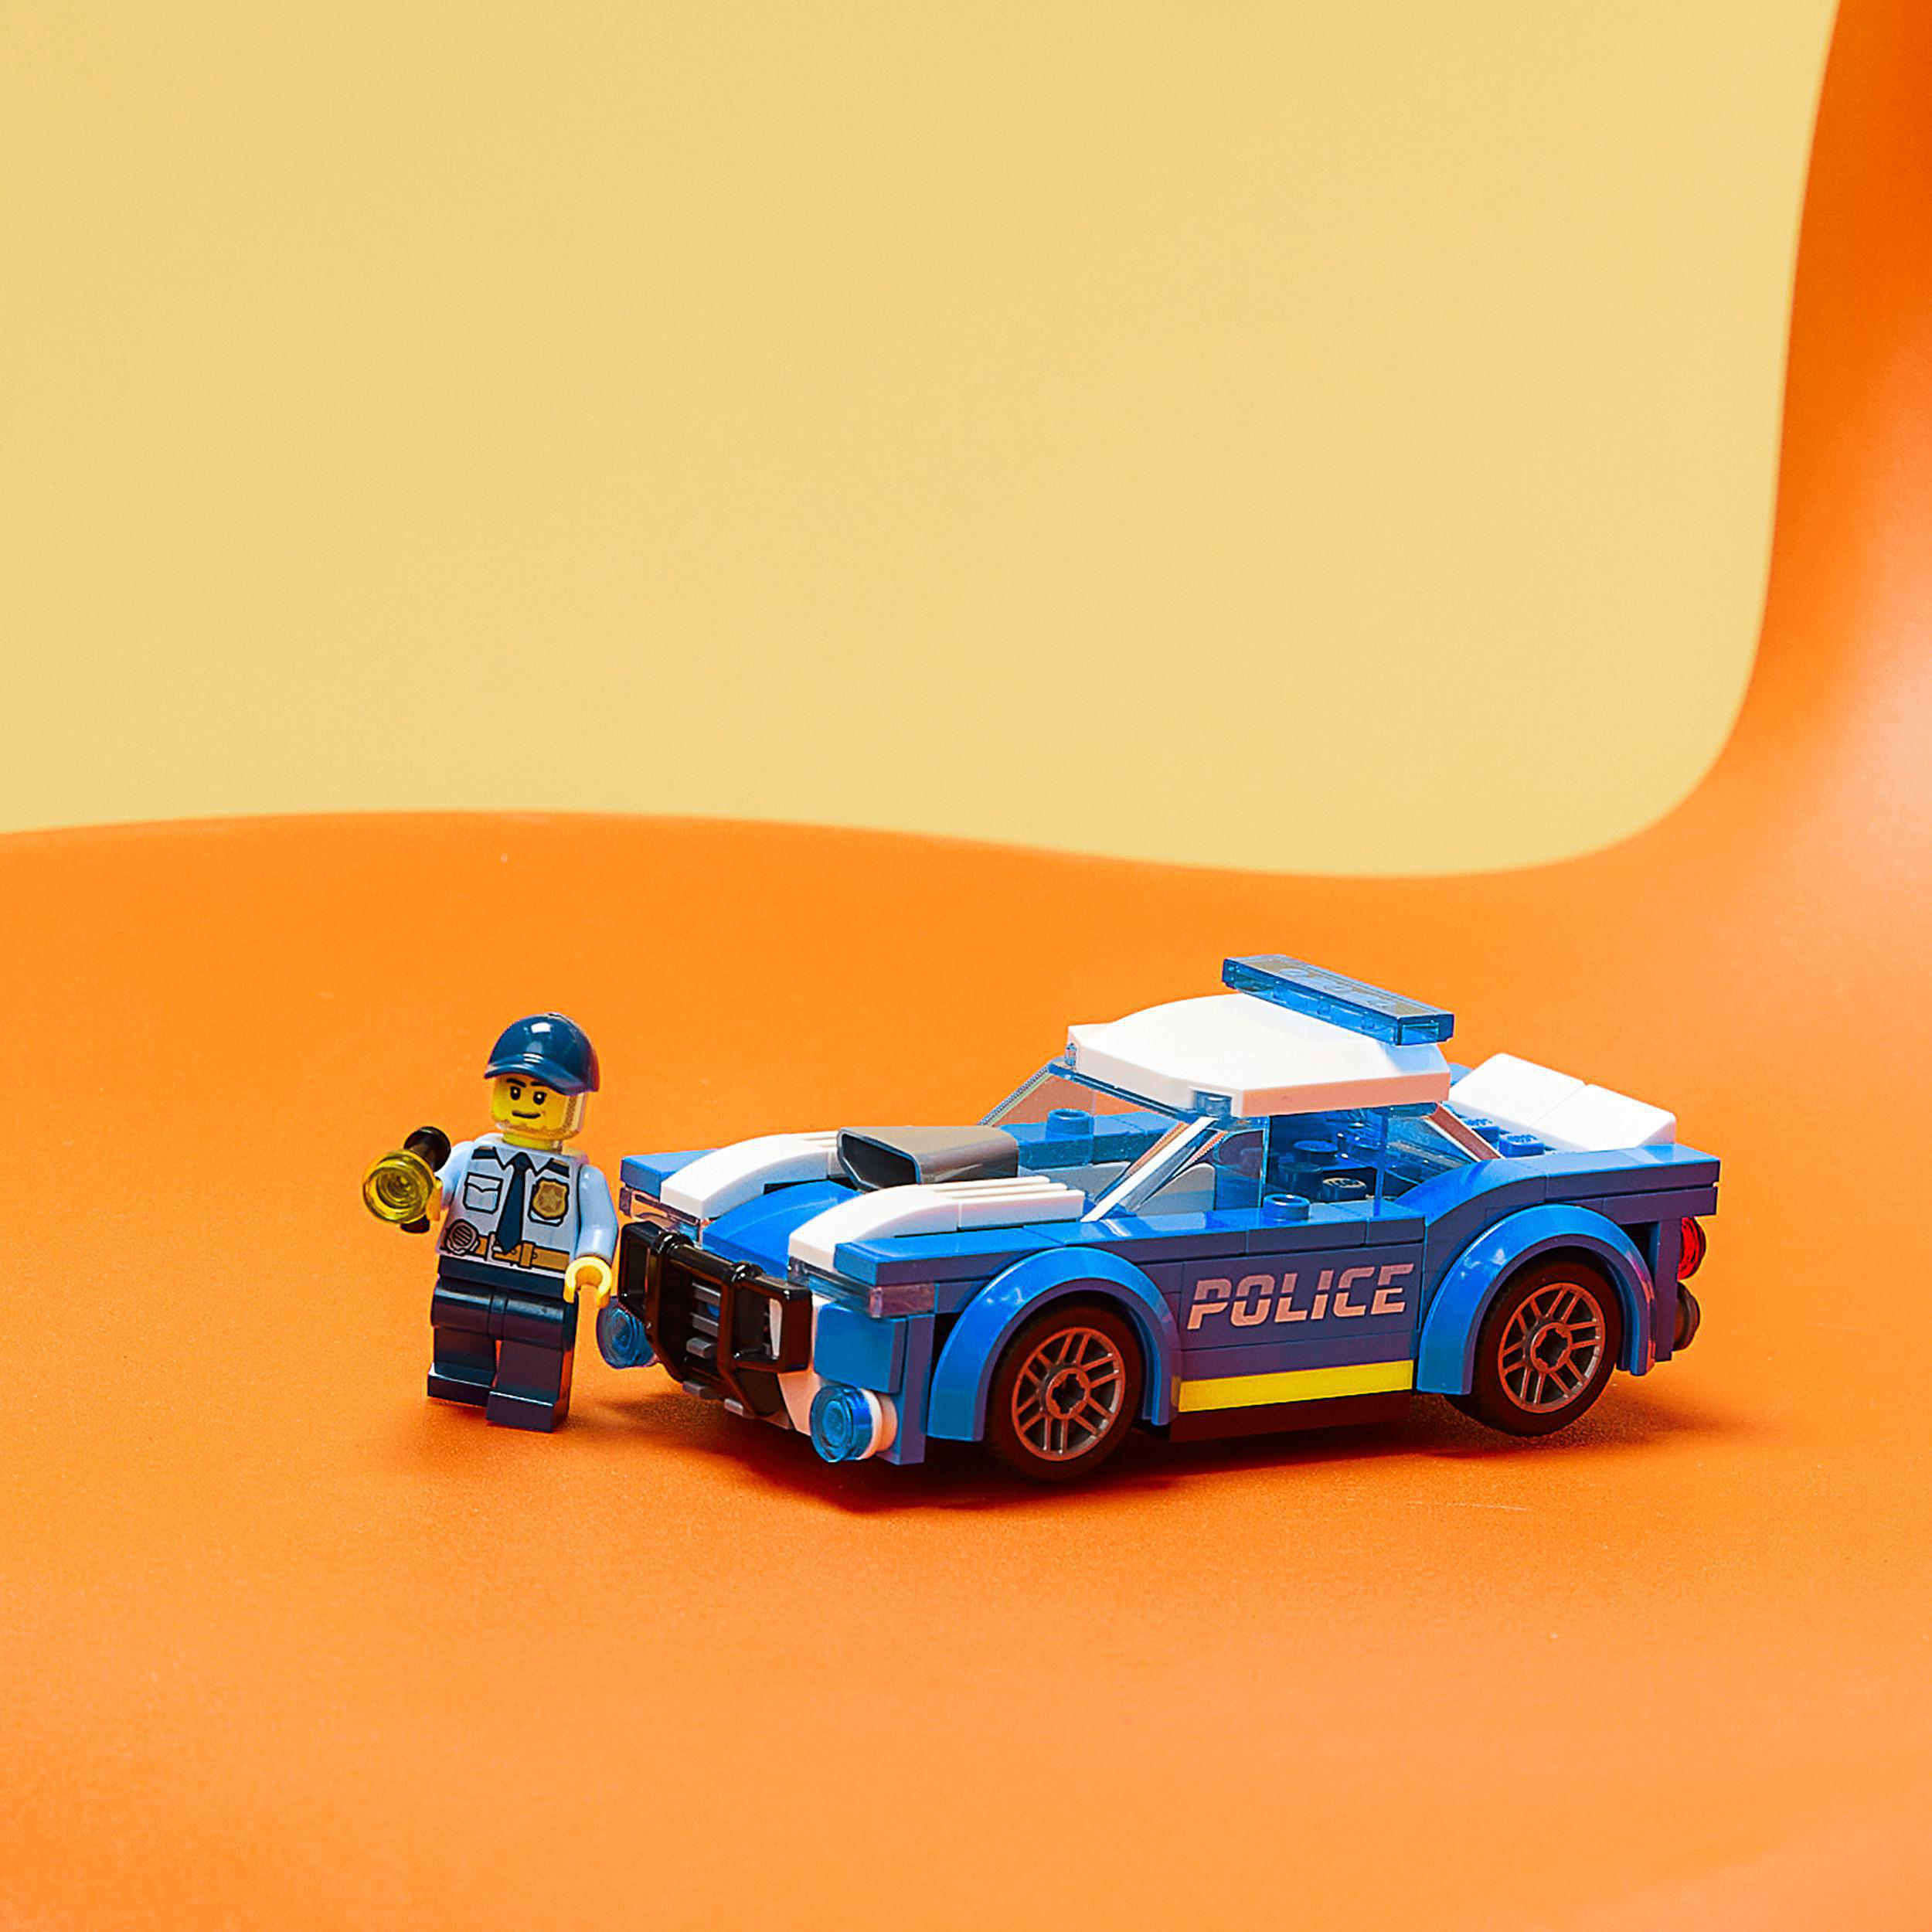 LEGO City 60312 Bausatz, Mehrfarbig Polizeiauto